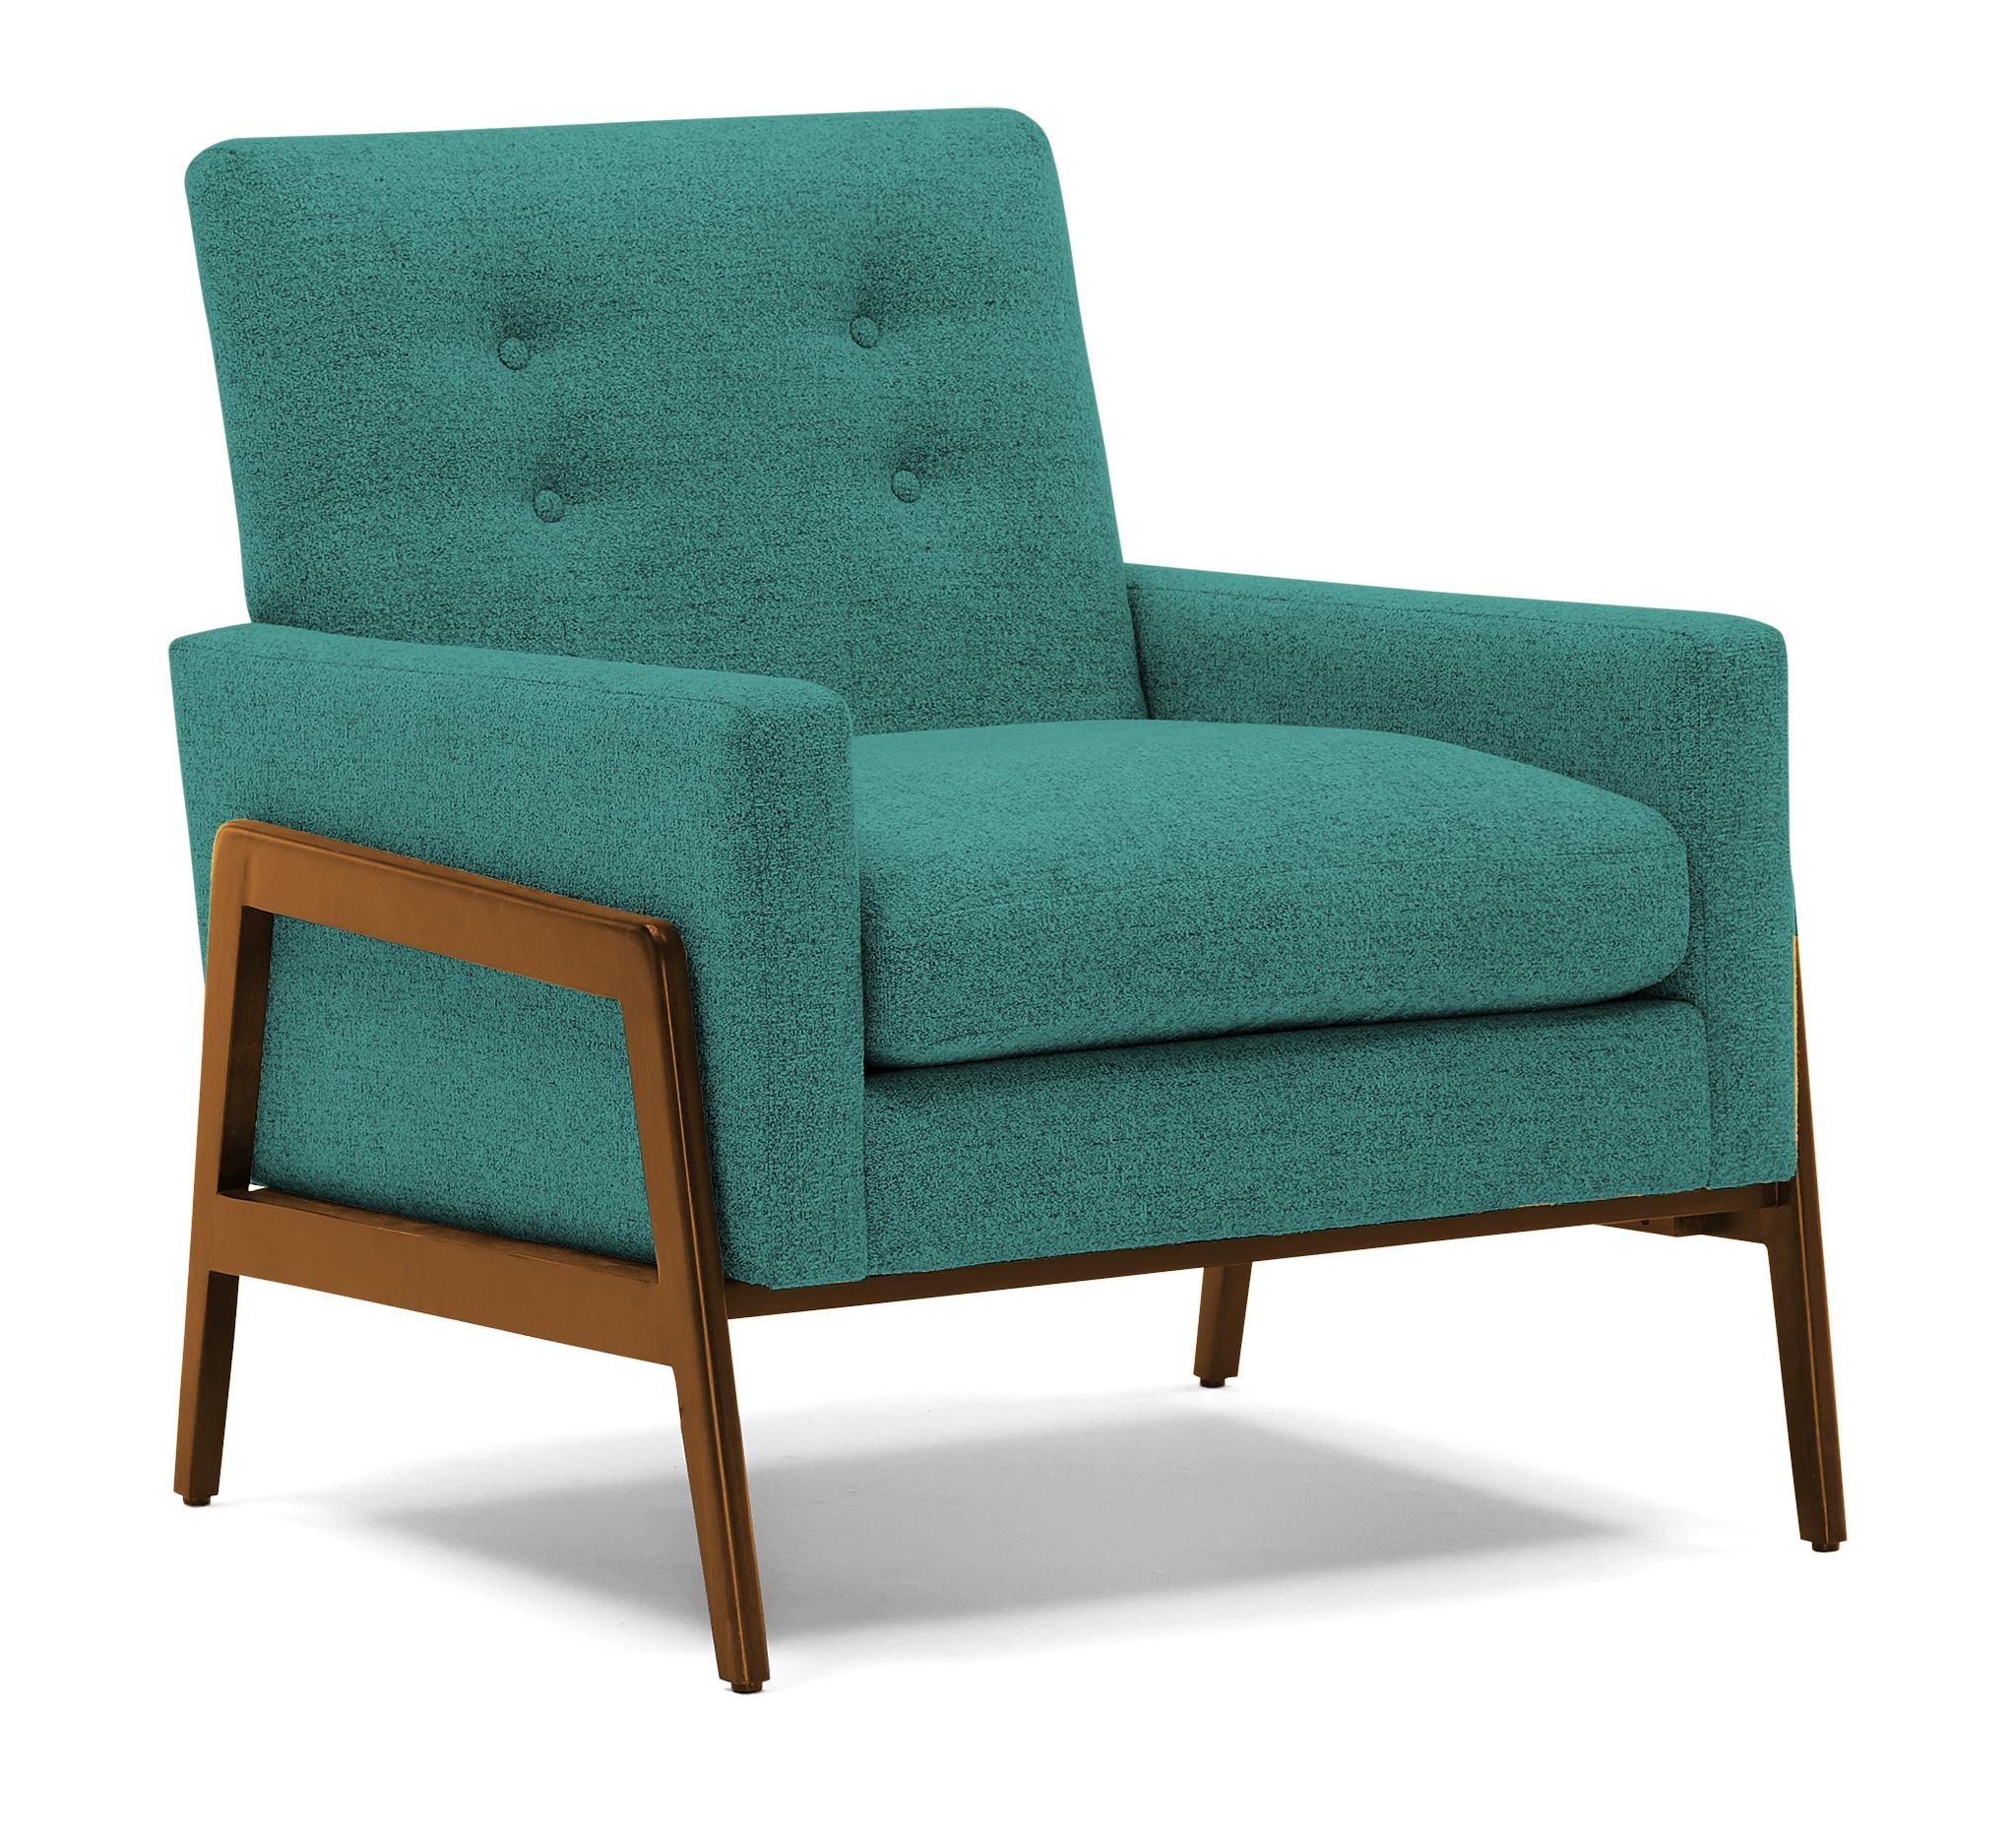 Green Clyde Mid Century Modern Chair - Essence Aqua - Mocha - Image 1